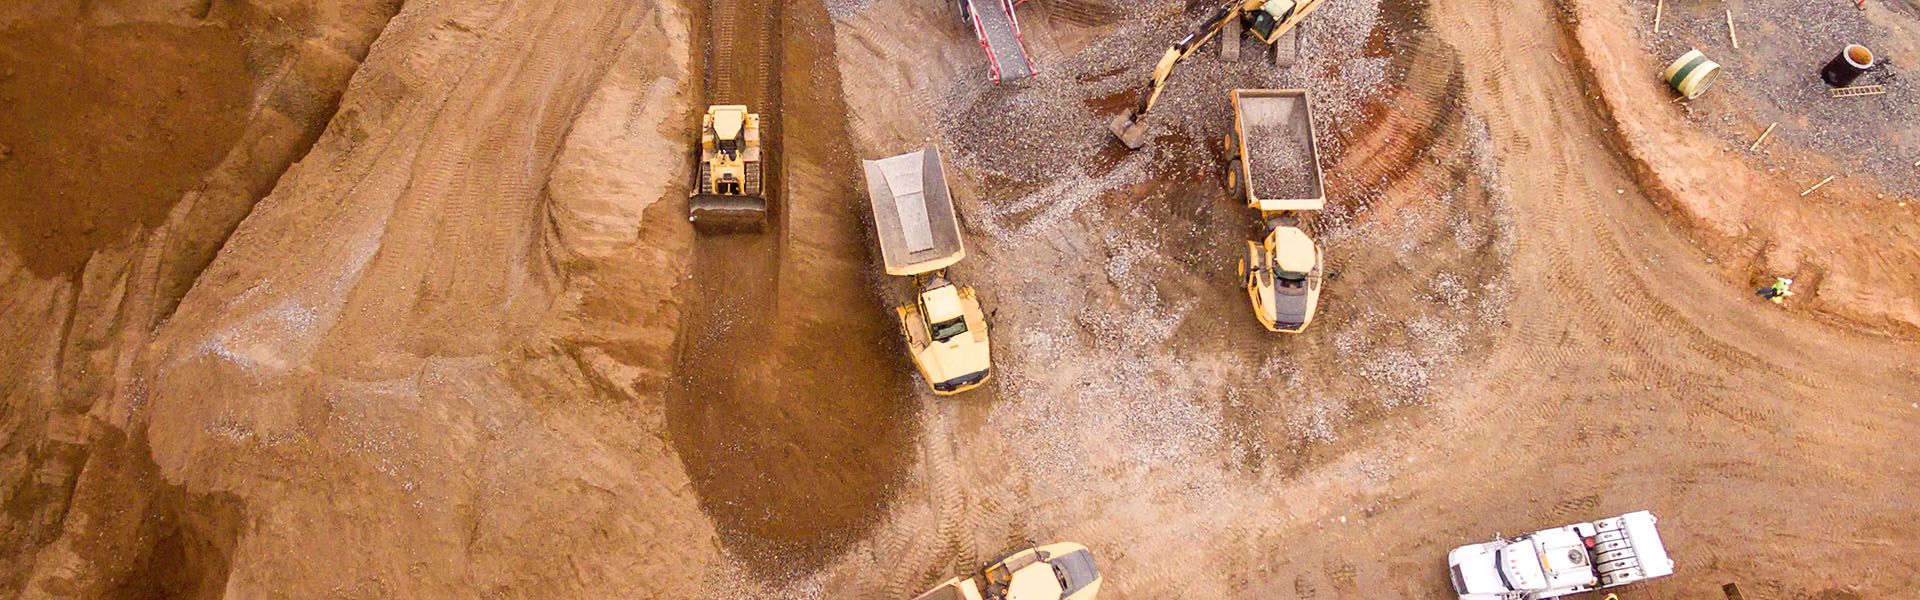 Construction trucks found on Georgia construction career sites